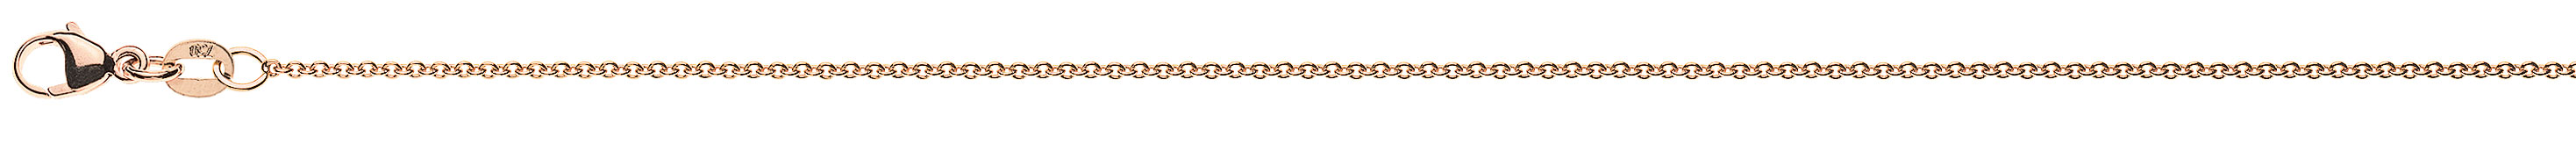 AURONOS Prestige Necklace Rose Gold 18K Round Anchor 55cm 1.3mm